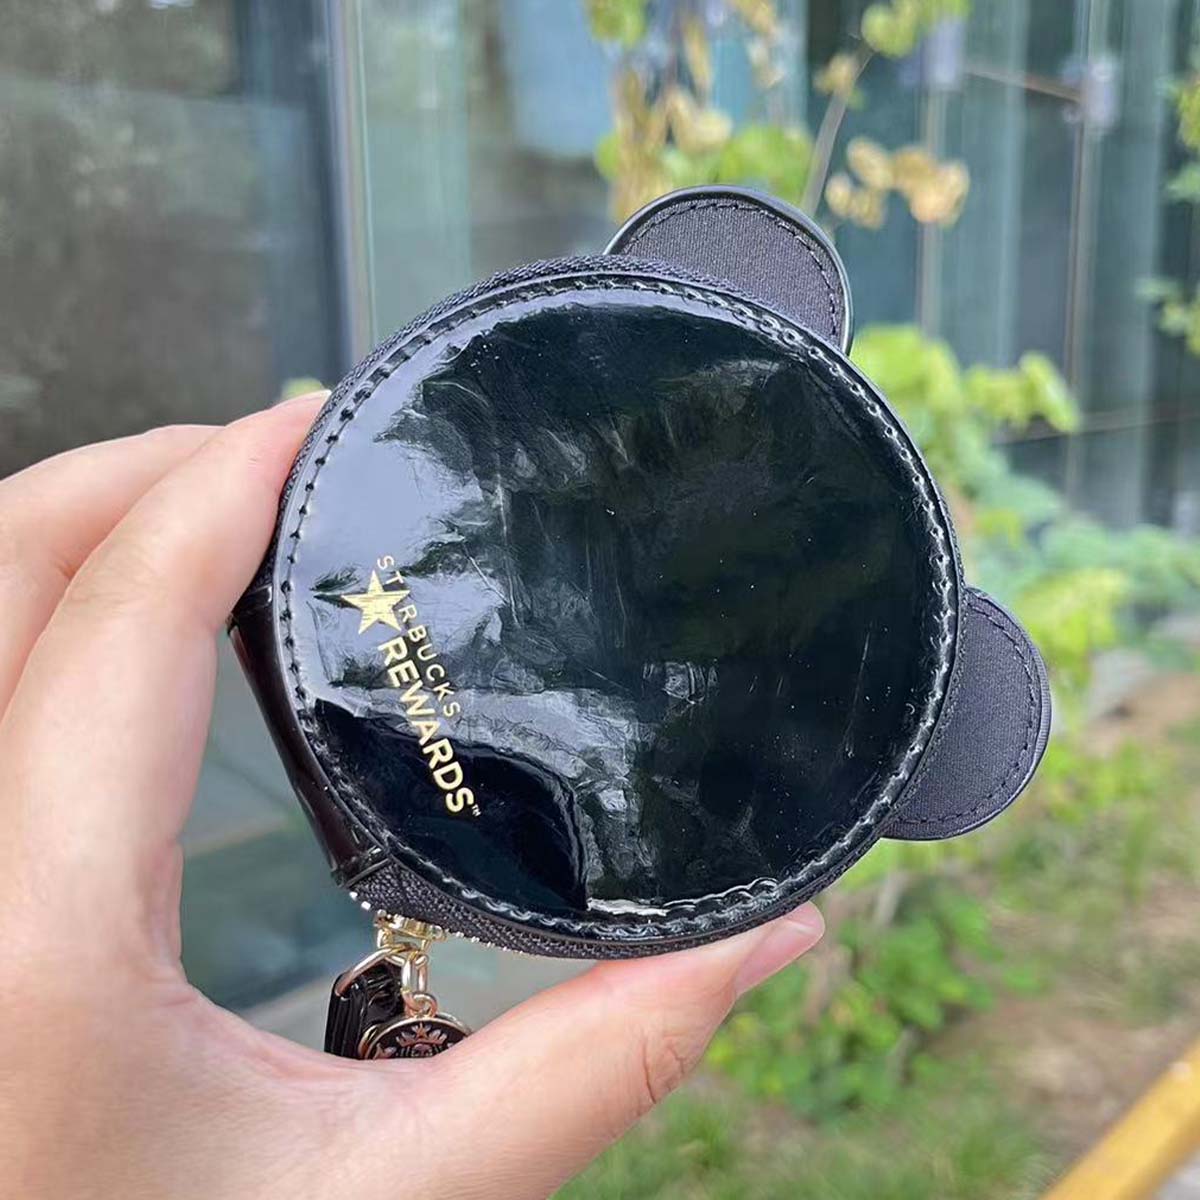 Starbucks China Black Mickey Coin purse